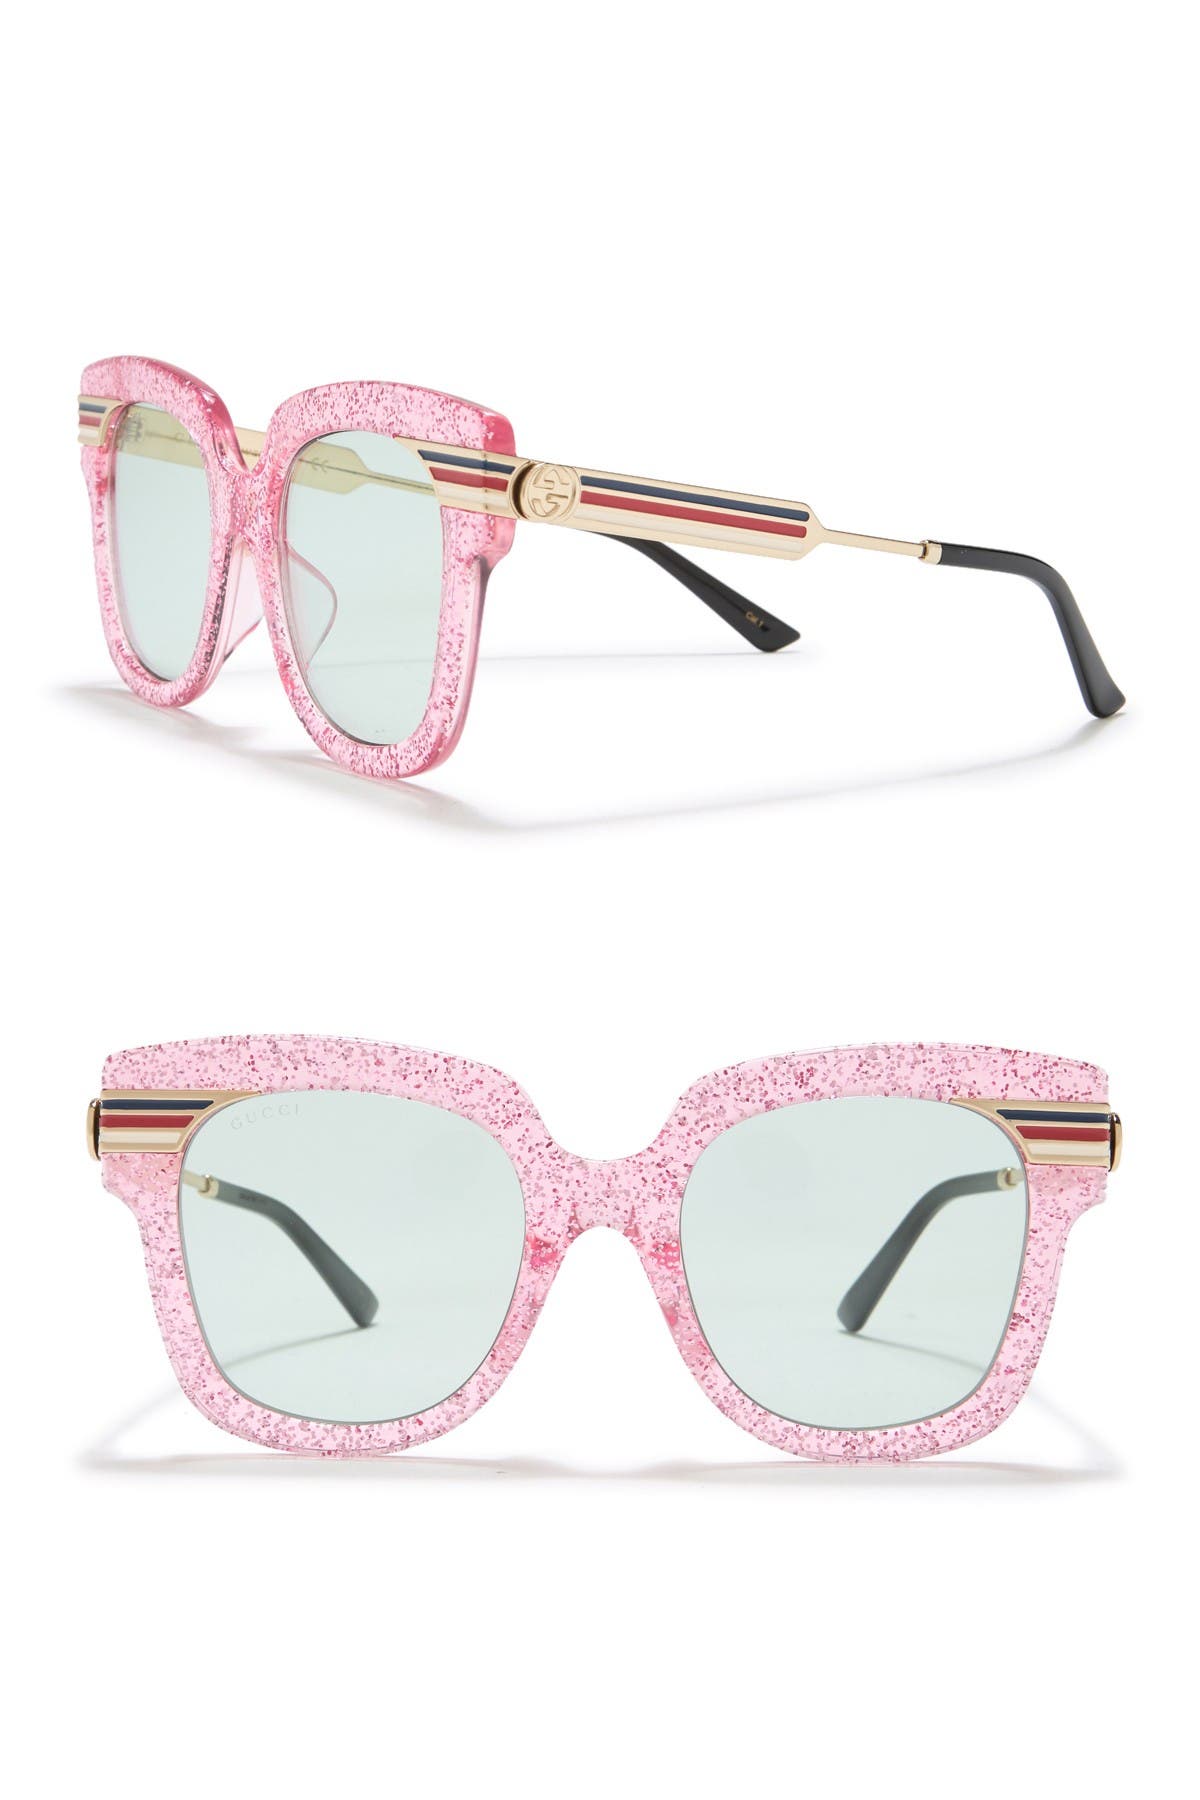 gucci pink glitter glasses